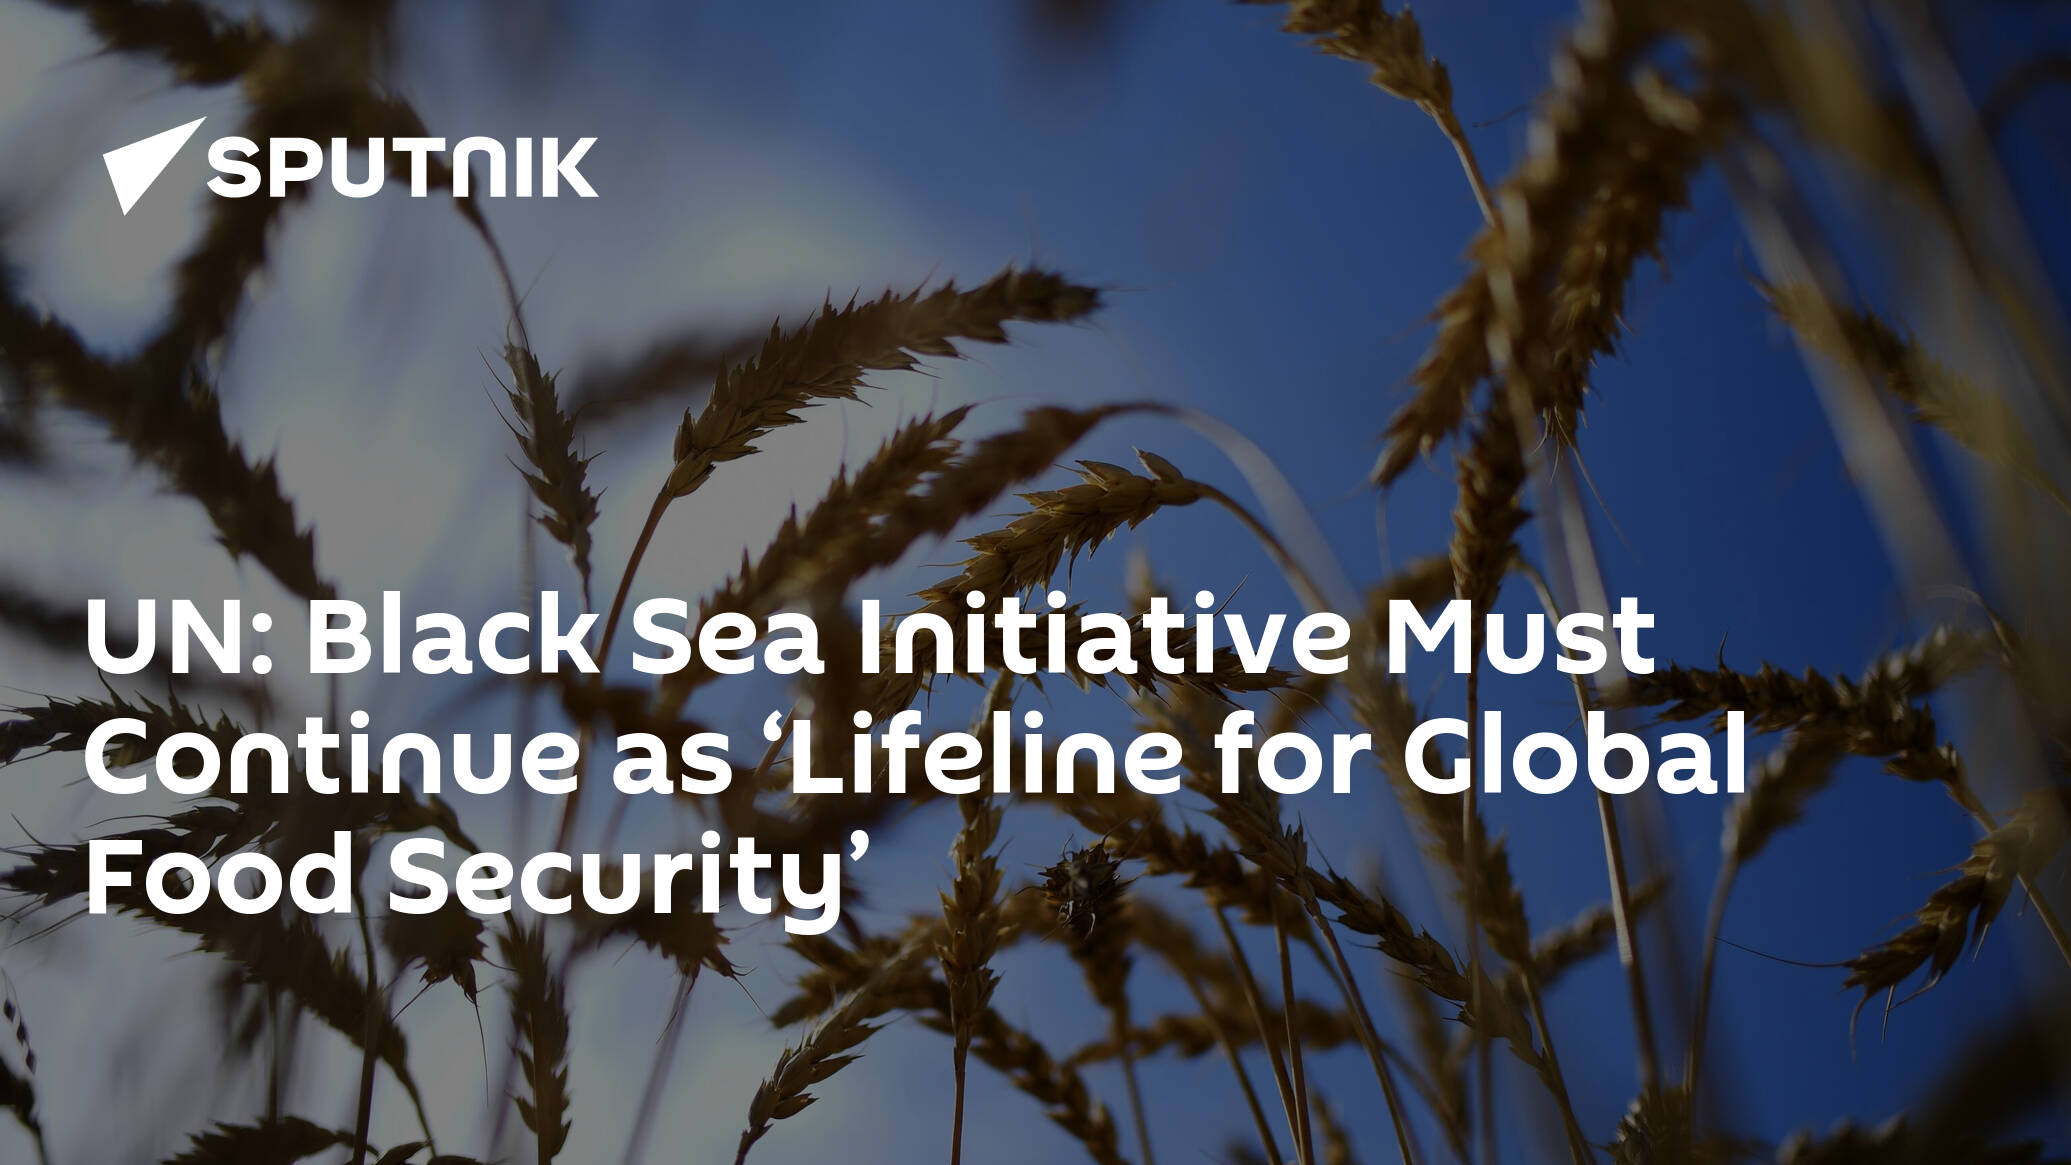 UN: Black Sea Initiative Must Continue as ‘Lifeline for Global Food Security’